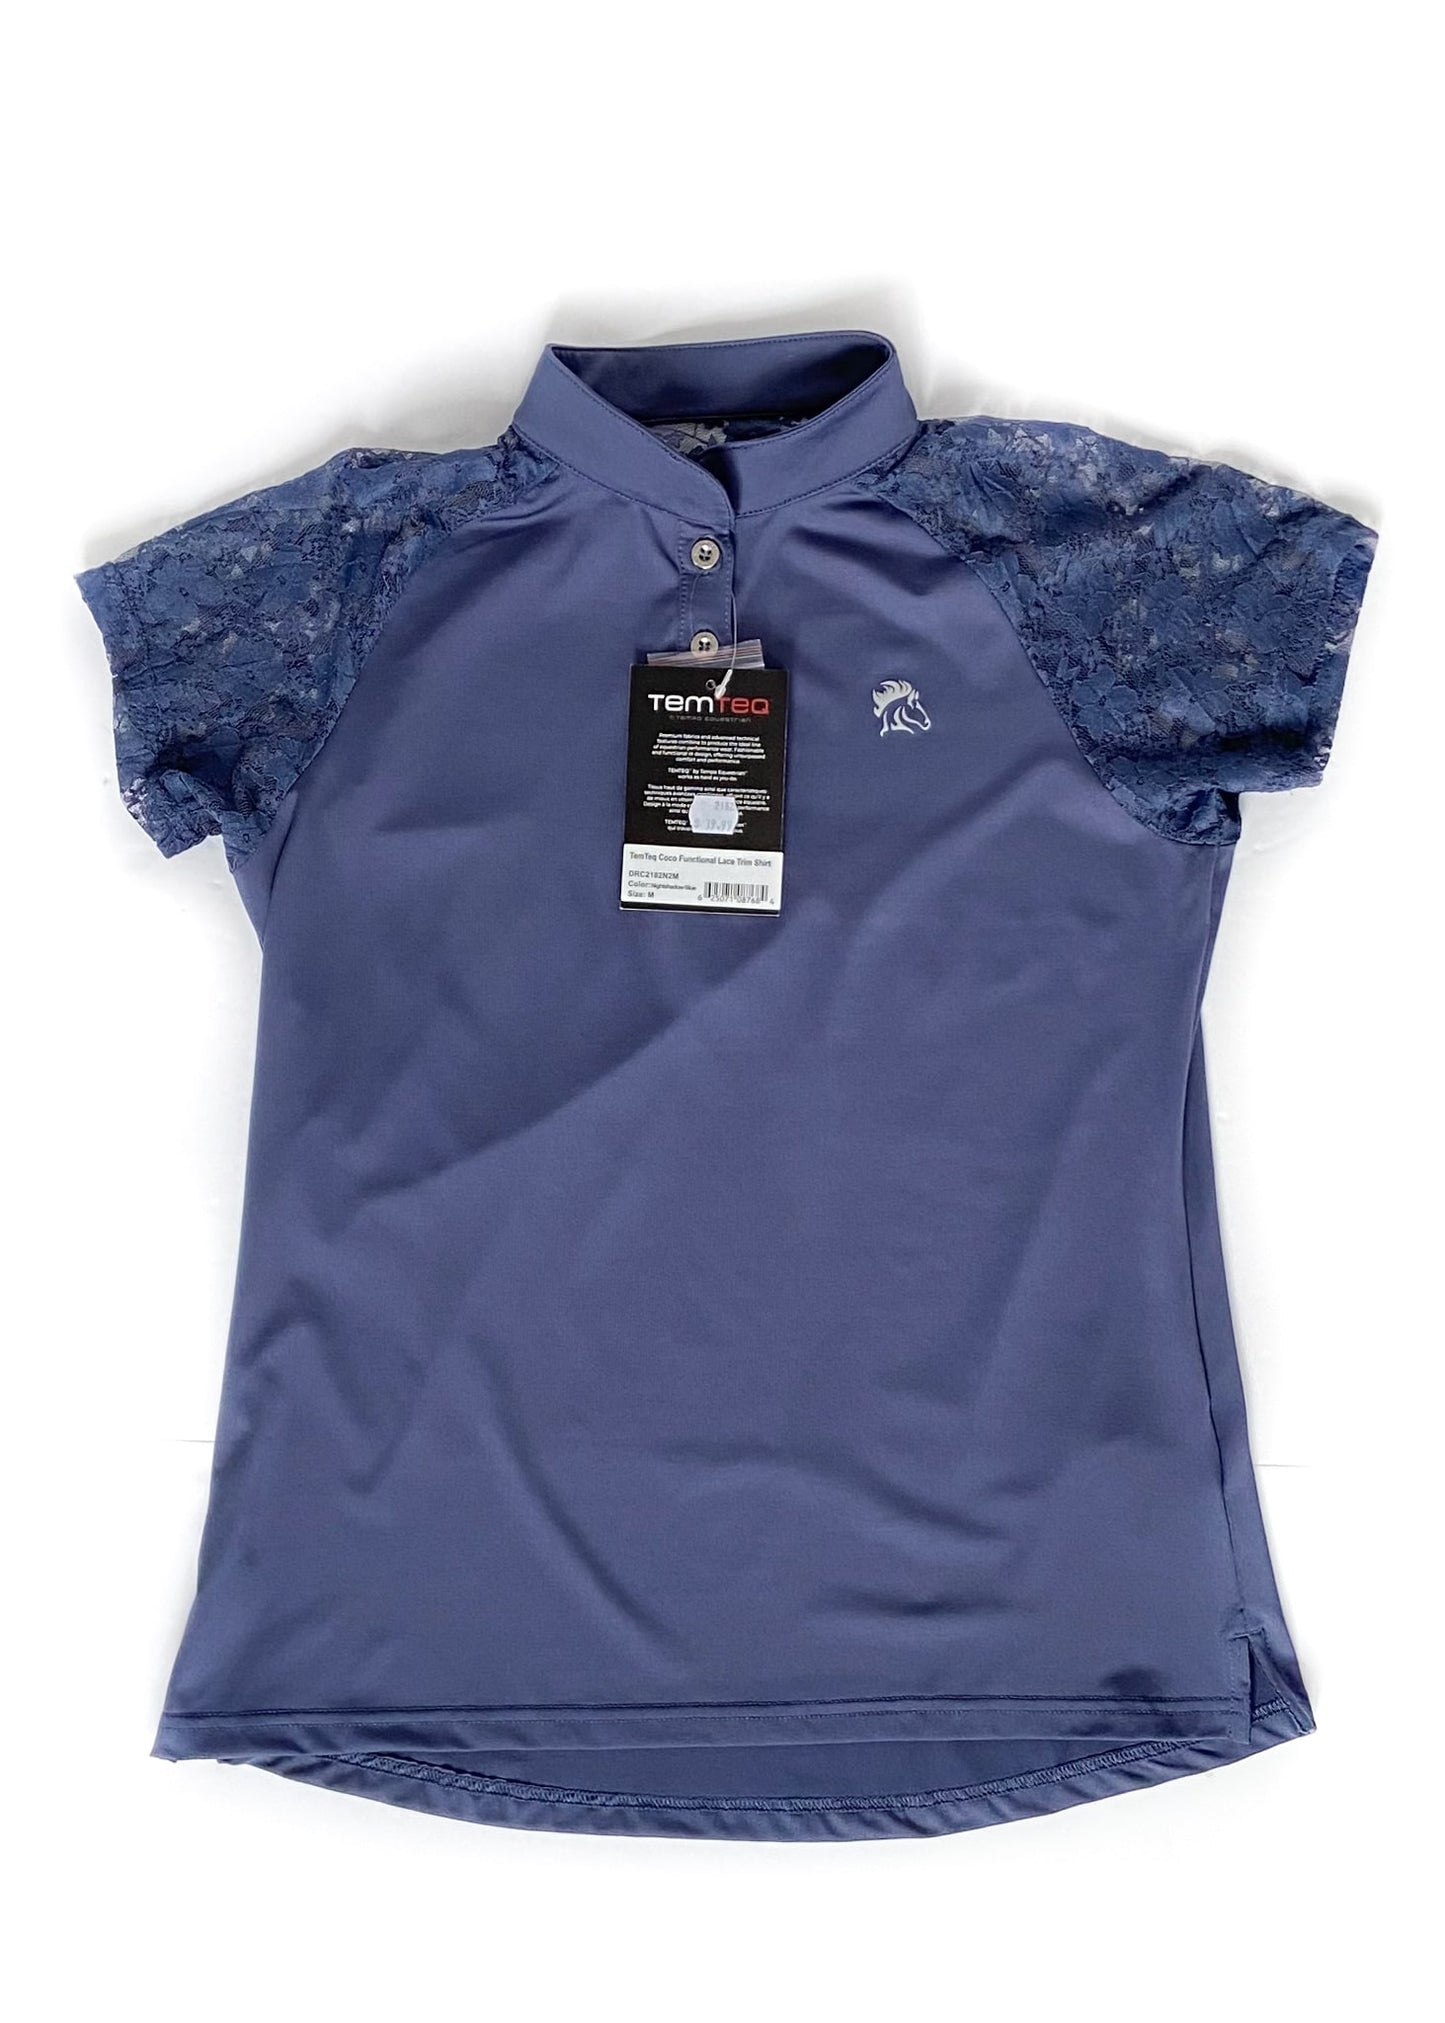 Tempo Equestrian Coco Functional Lace Trim Shirt - Blue - Women's Medium